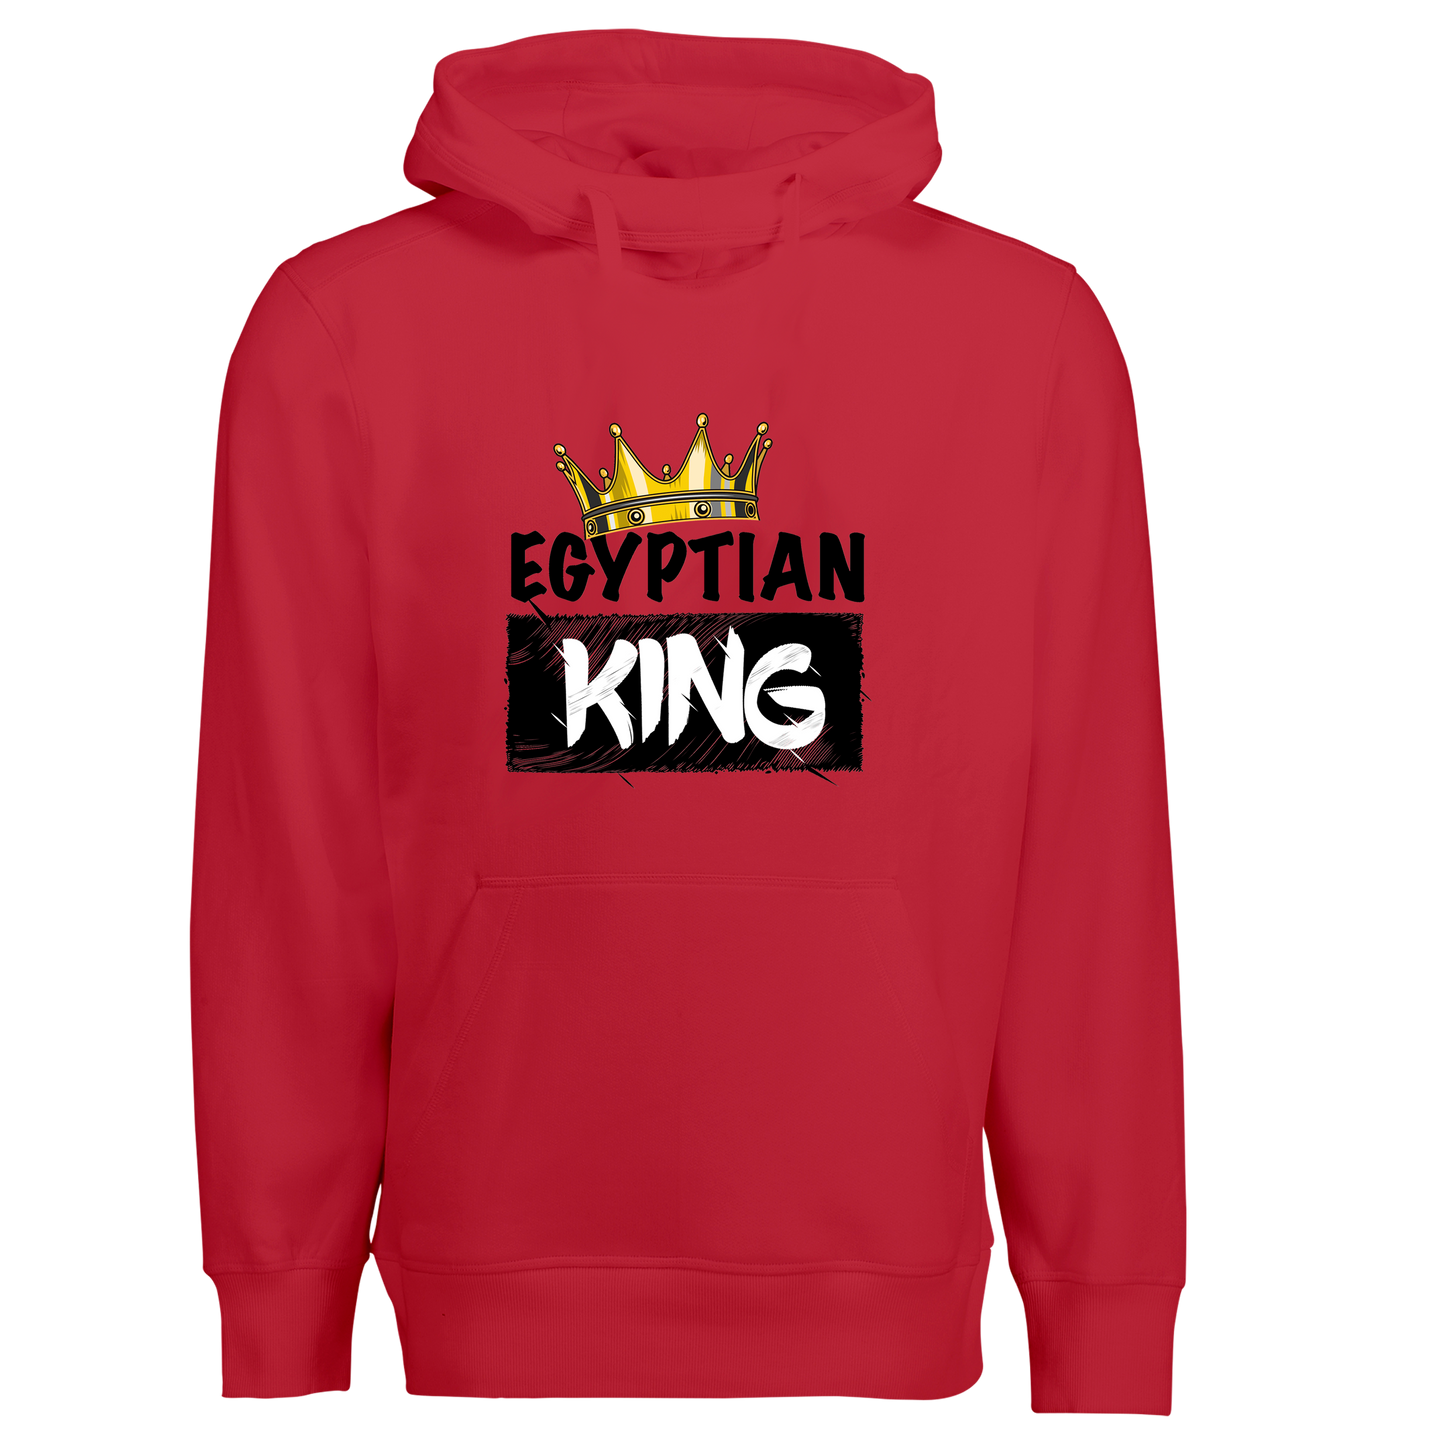 Egyptian king - hoodie